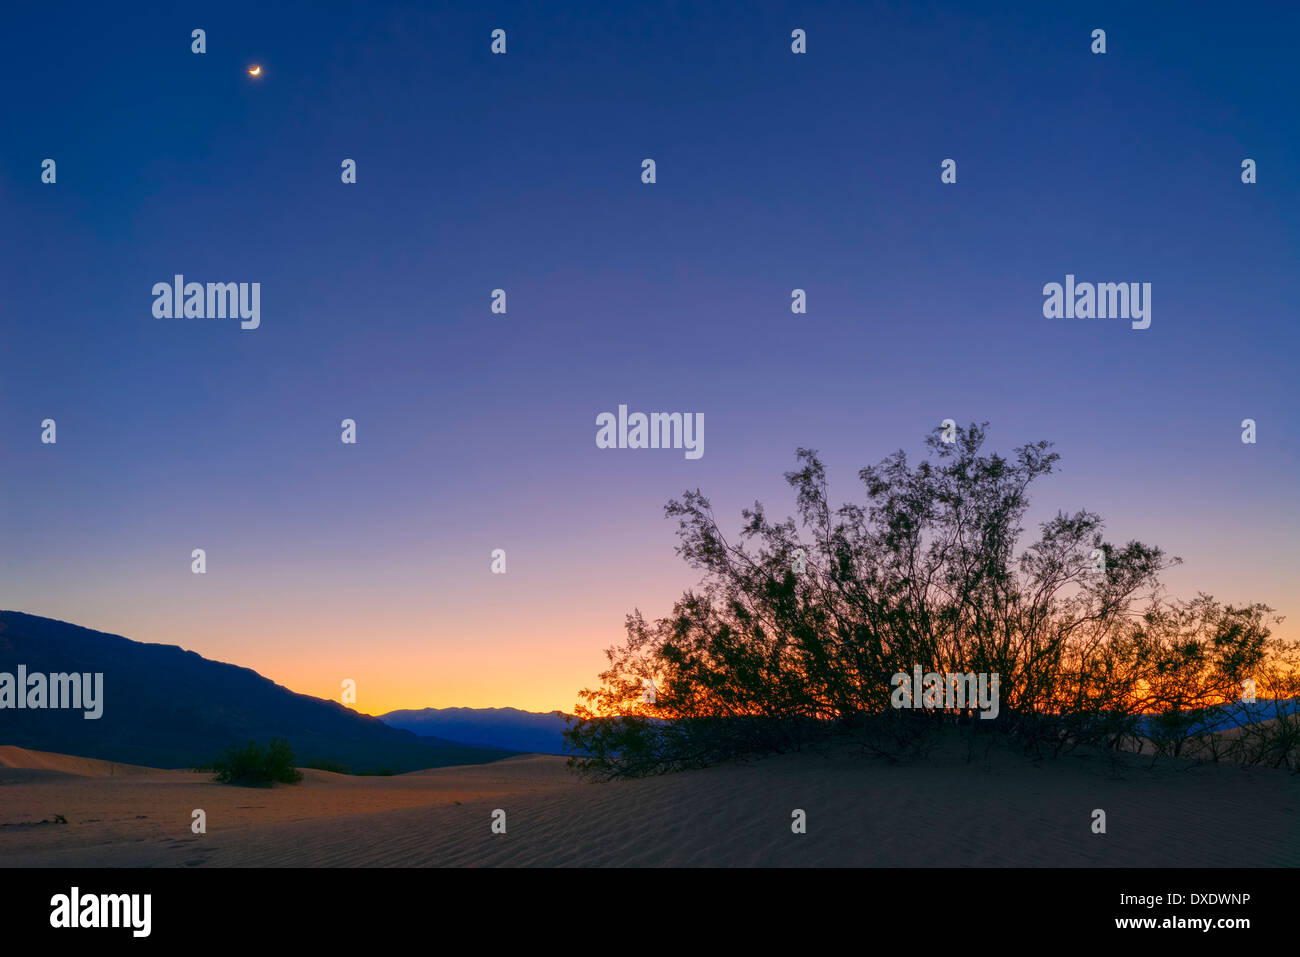 Sonnenuntergang mit Mond, Mesquite Dünen, Kalifornien, USA Stockfoto